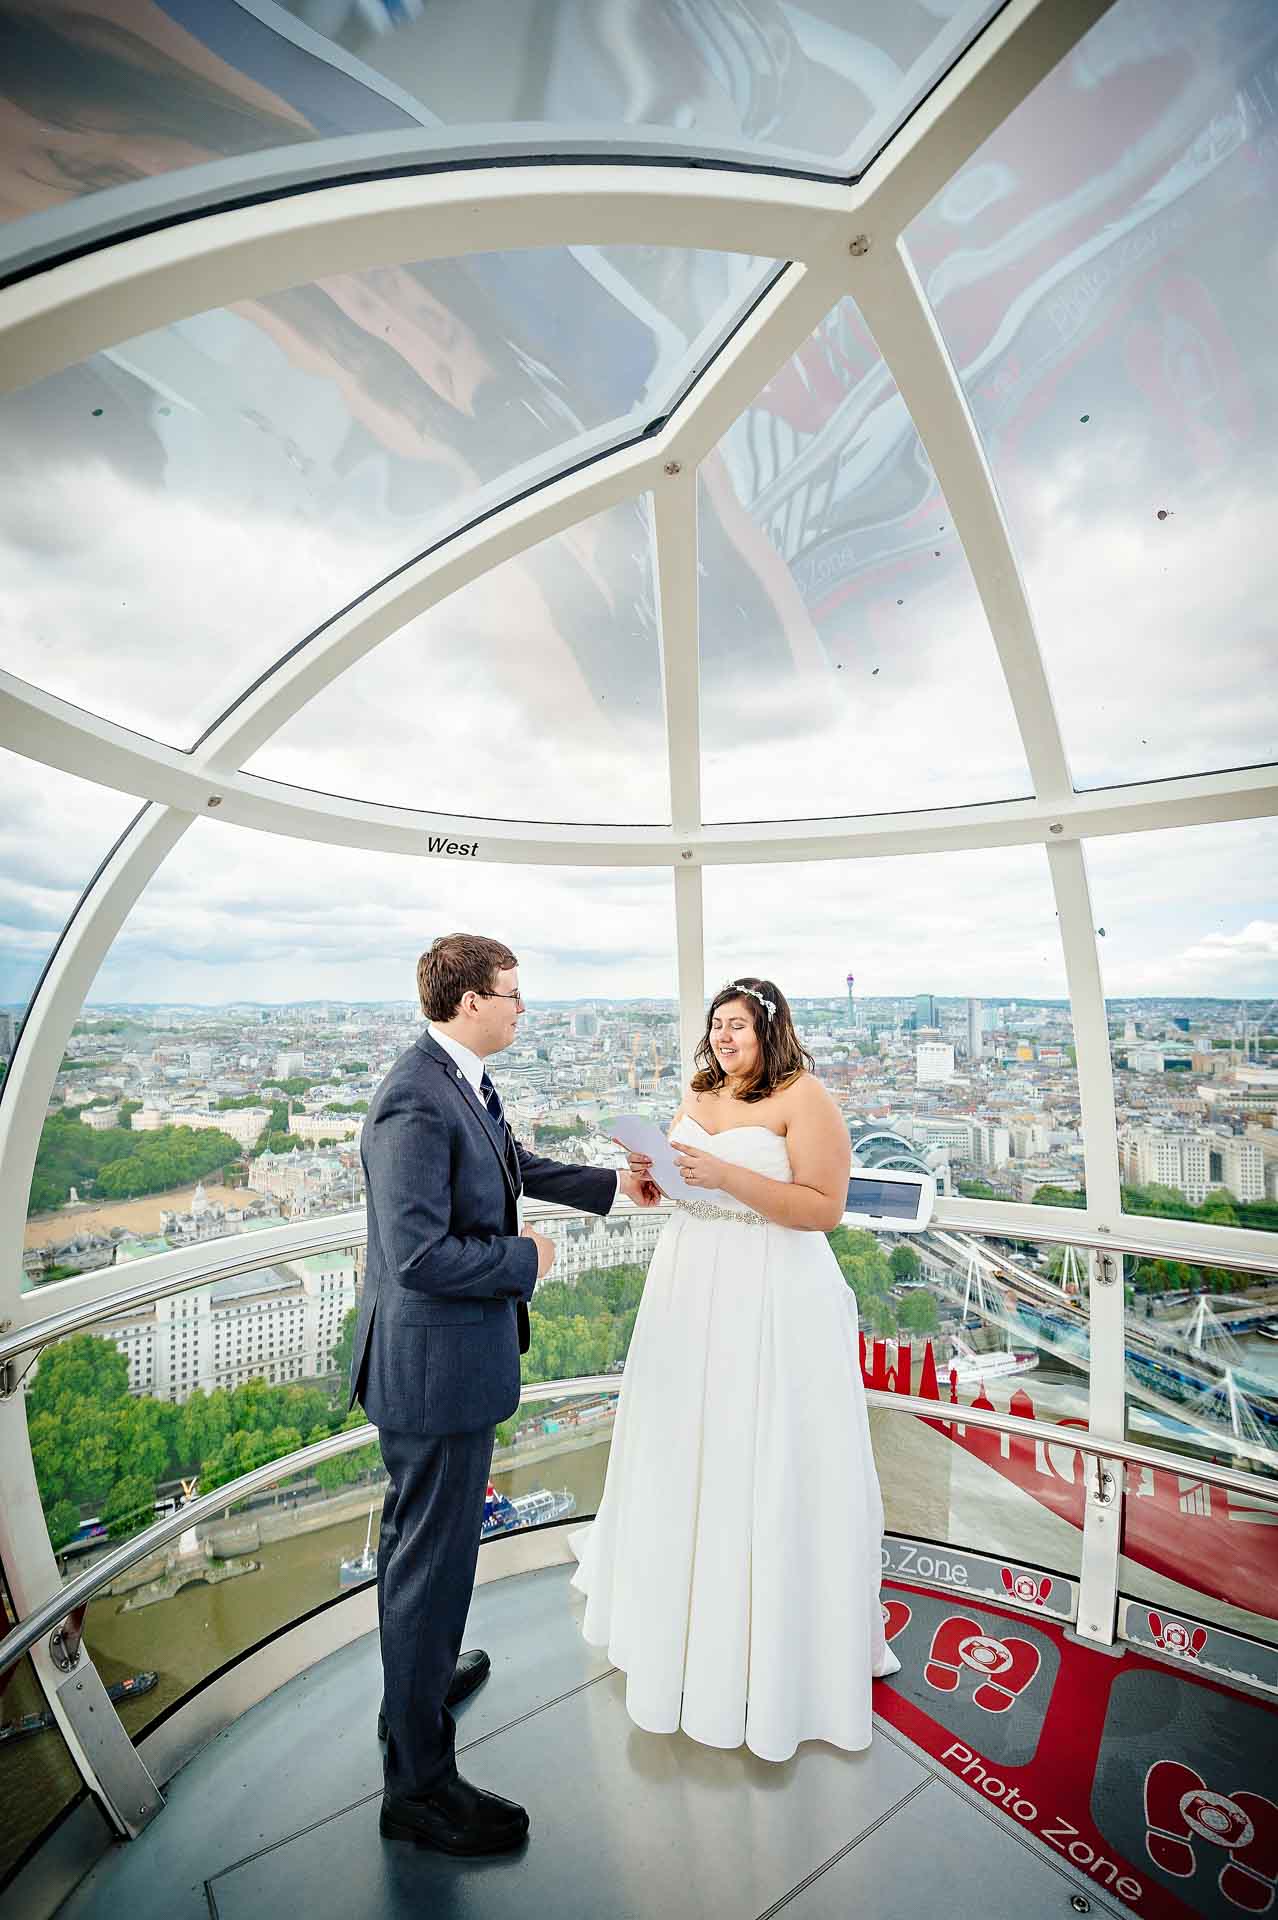 Wedding Vows on the London Eye